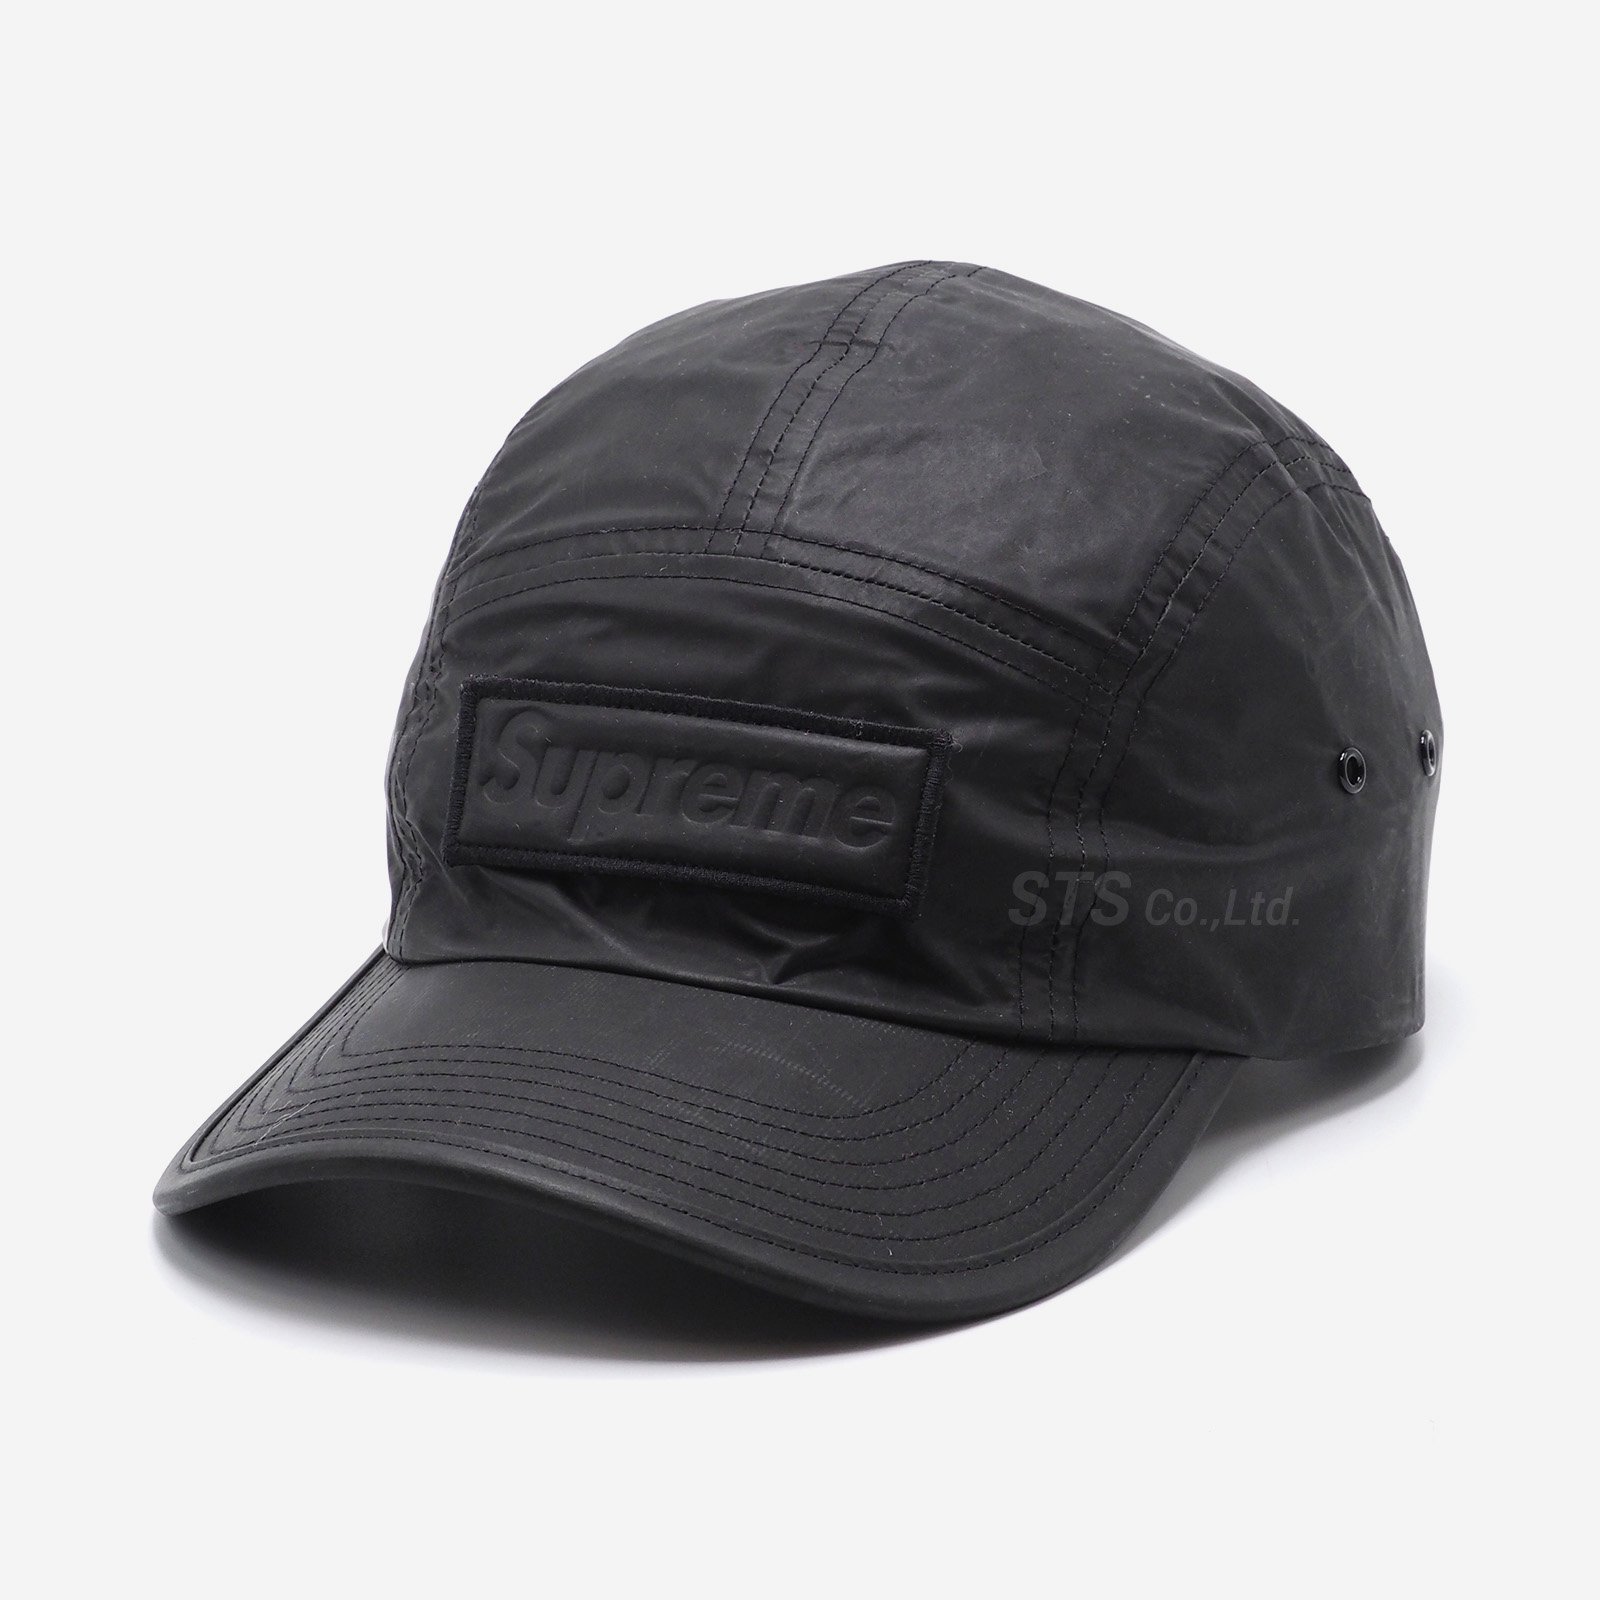 supreme reflective camp cap black